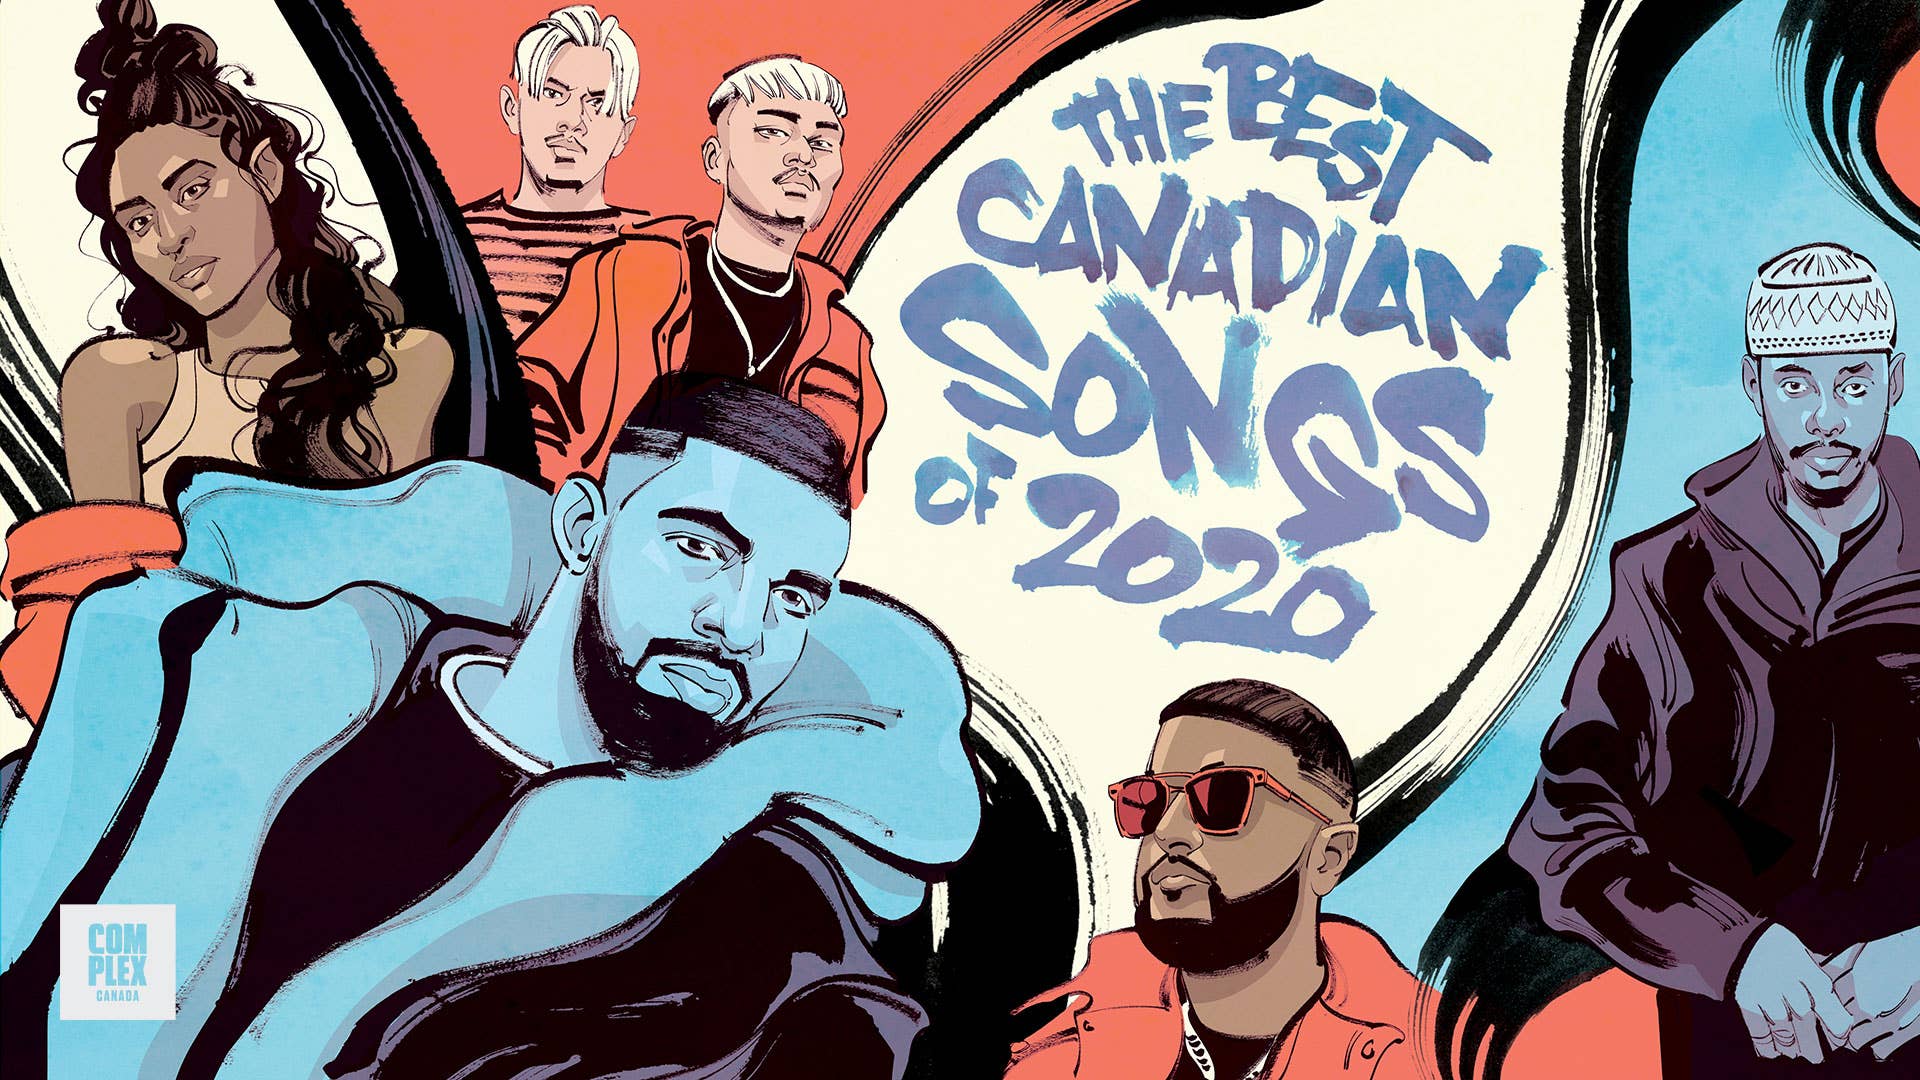 best canadian songs 2020 drake nav mustafa manila grey jessie reyez